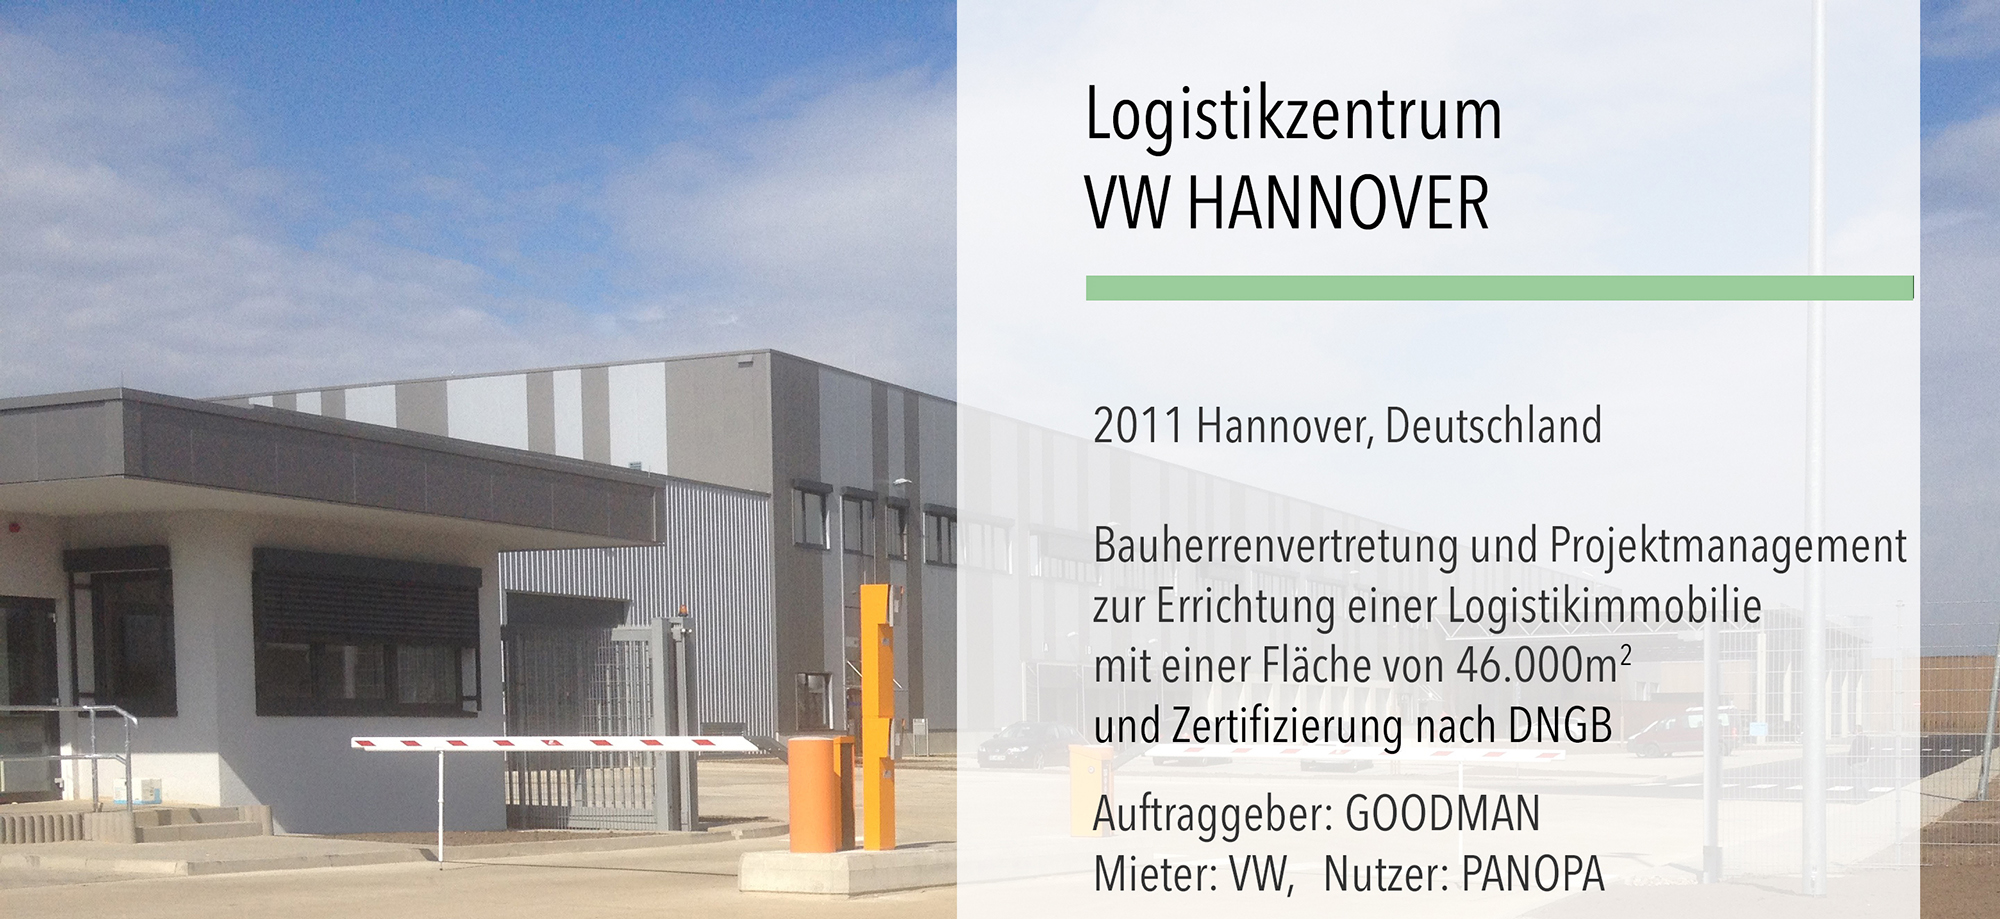 Logistikhalle Goodman Hannover VW